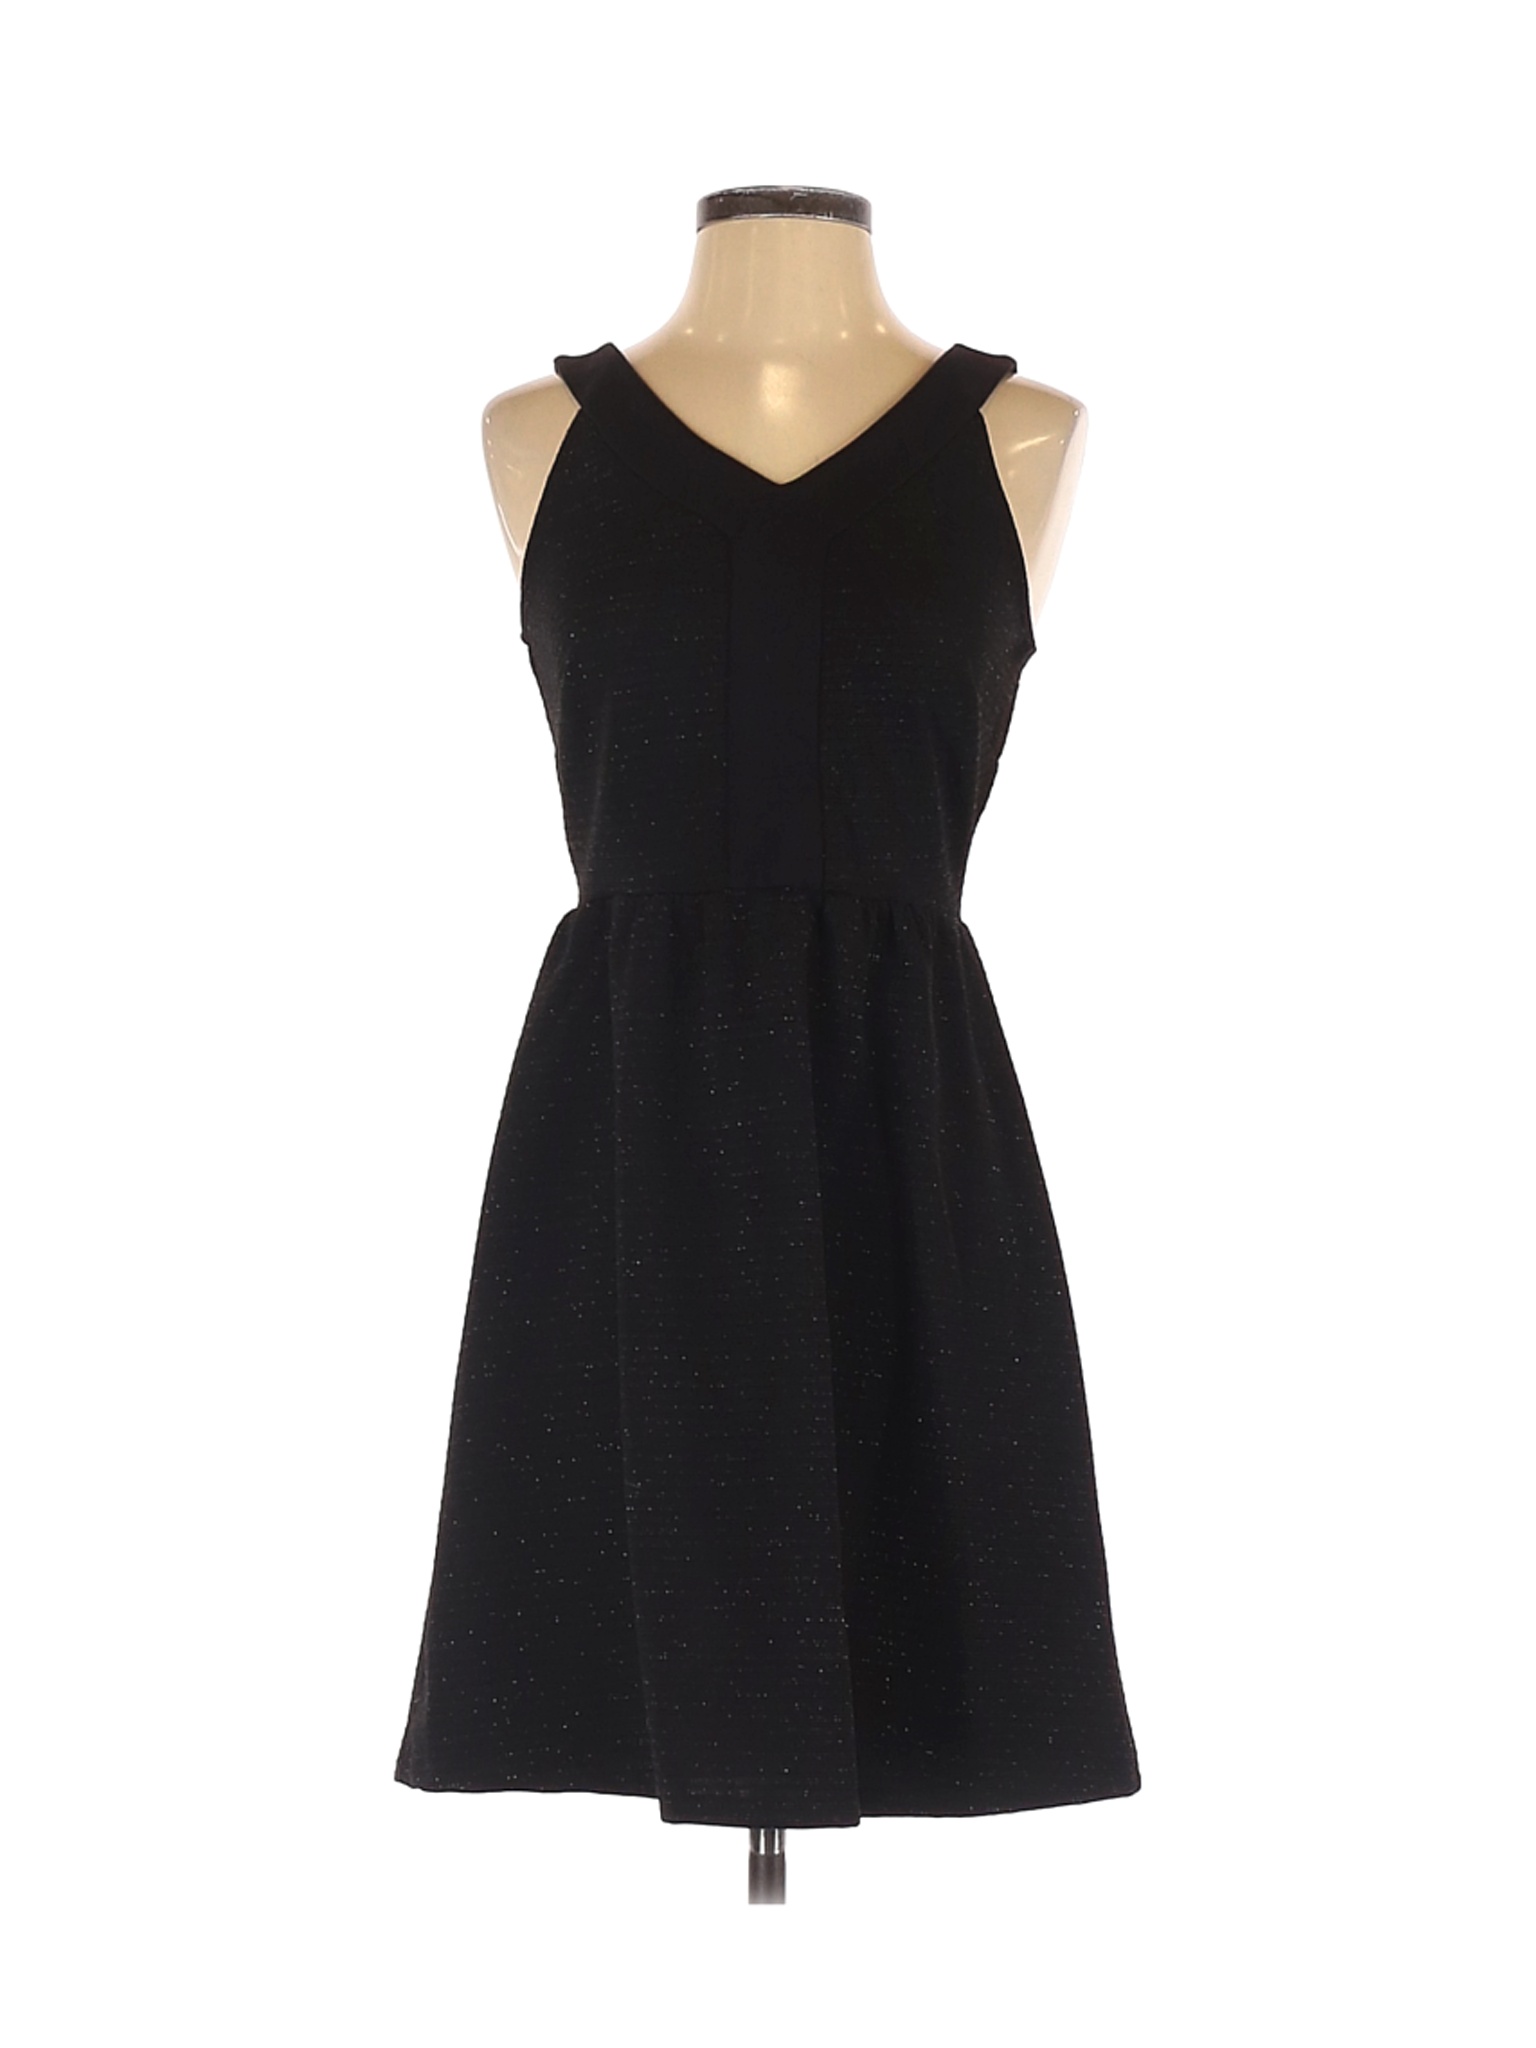 Maurices Women Black Cocktail Dress XS | eBay